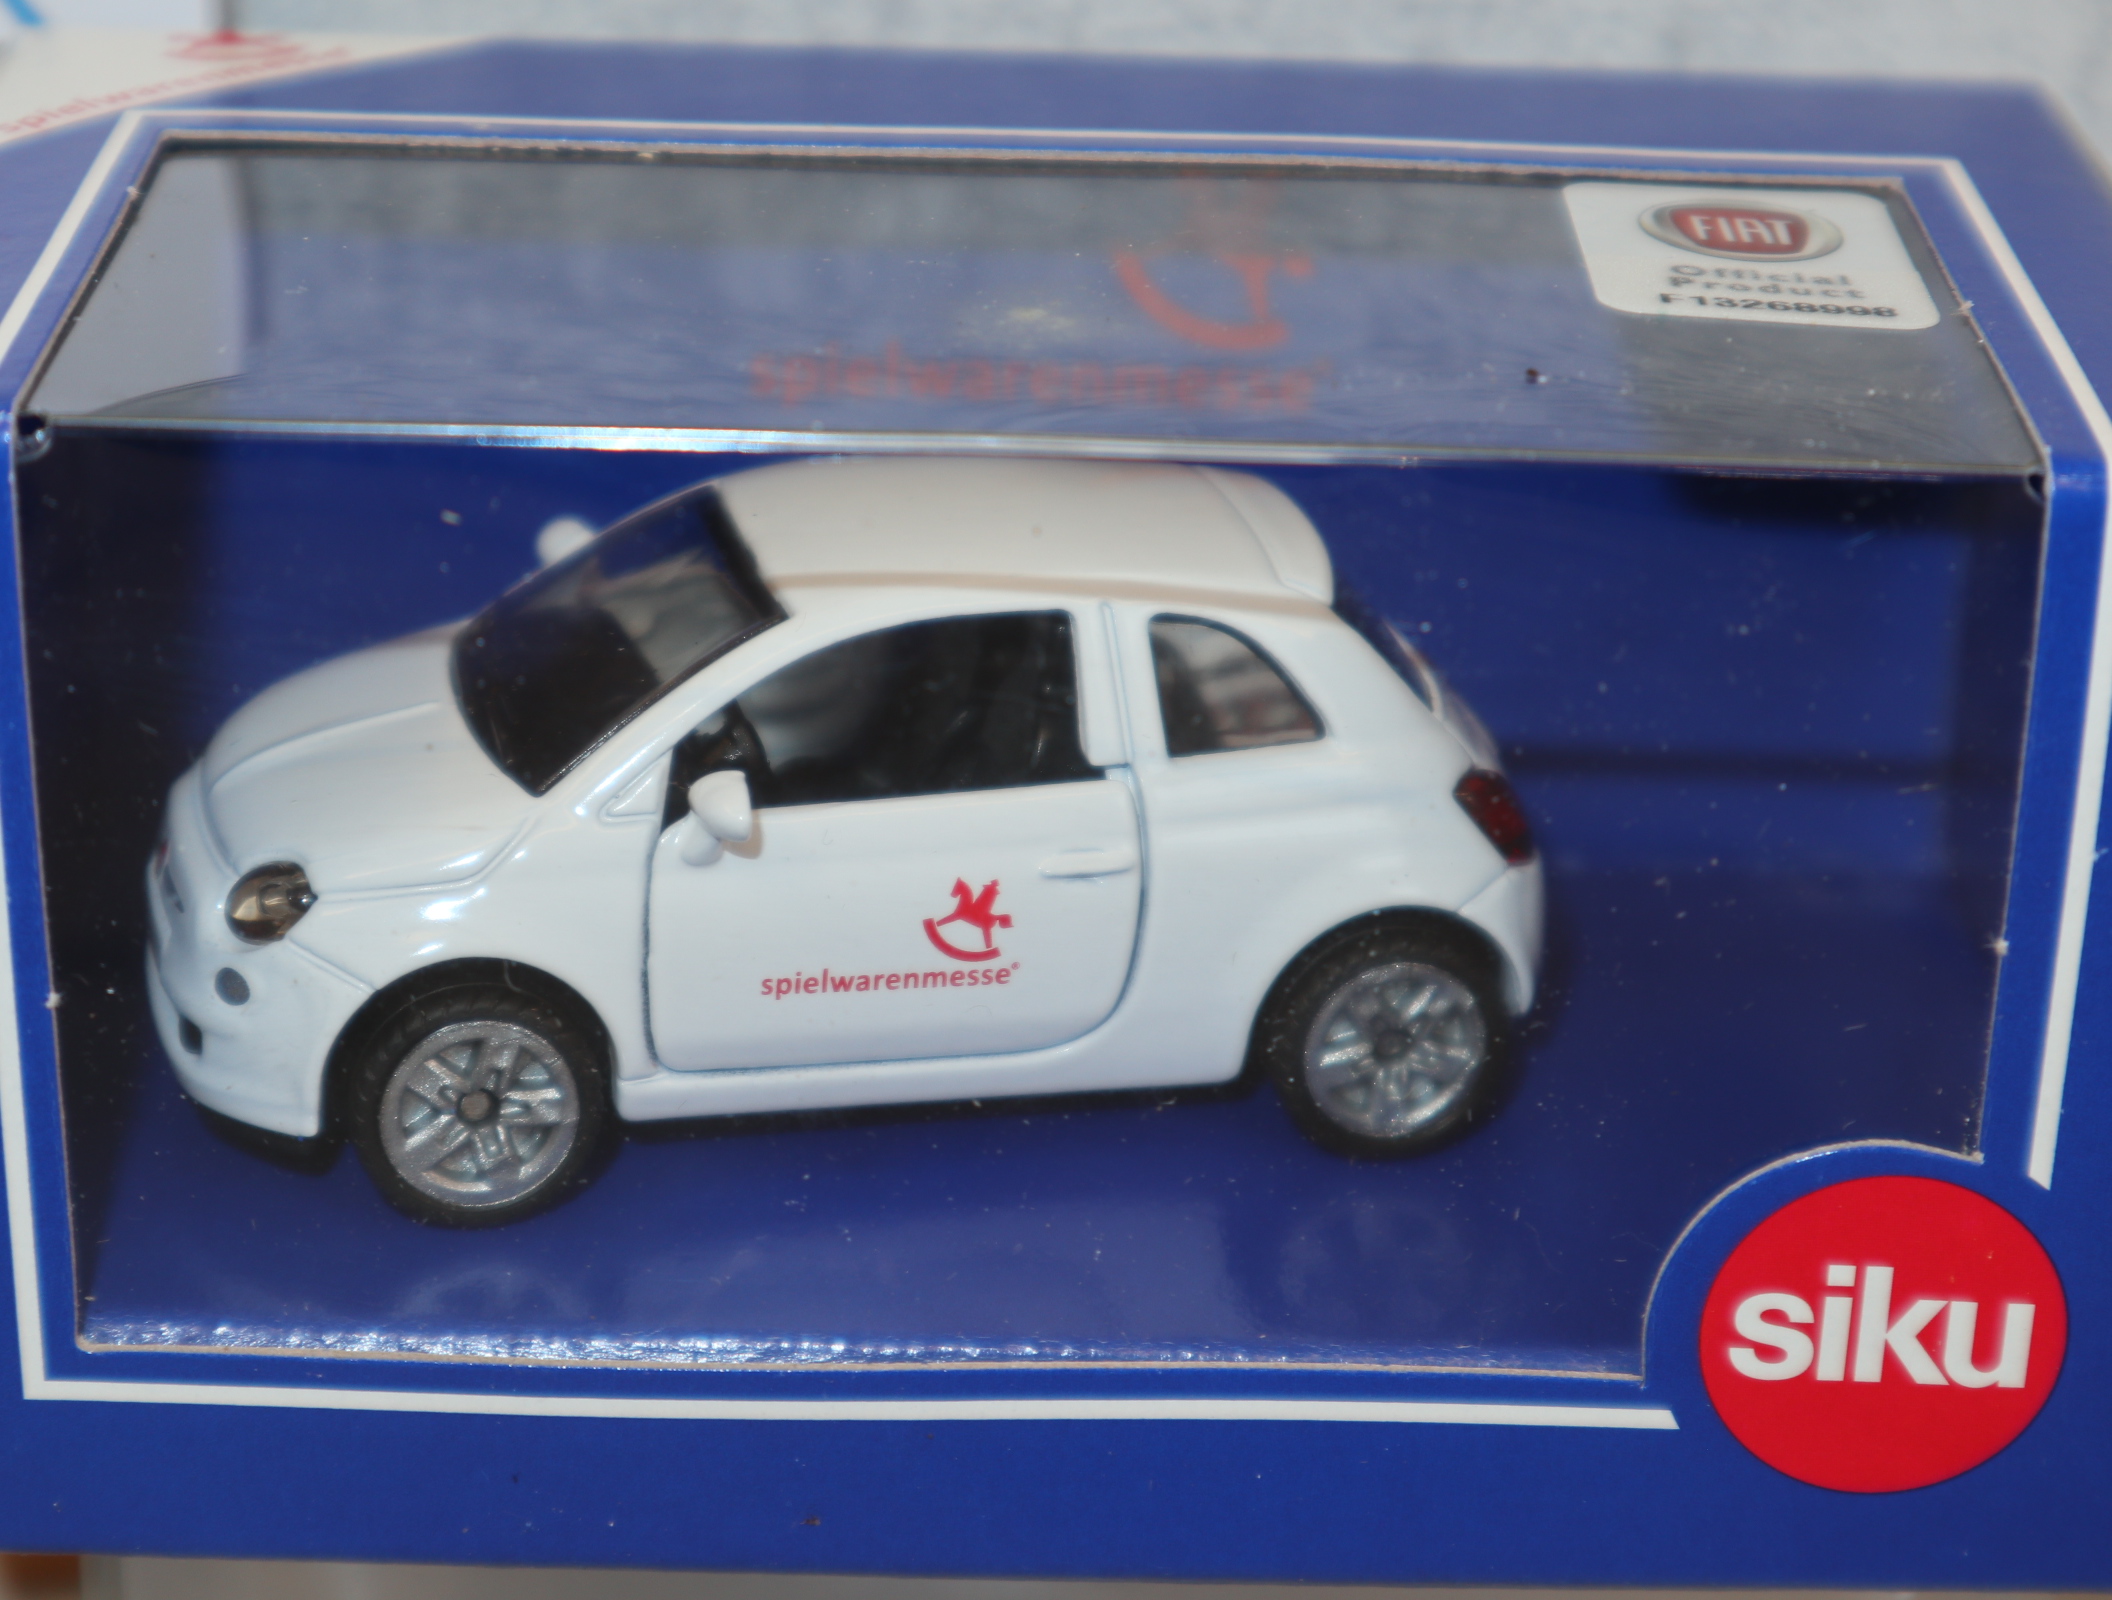 Siku 1453 1:50 Fiat 500 Sondermodell Spielwarenmesse Nürnberg 2017  in OVP